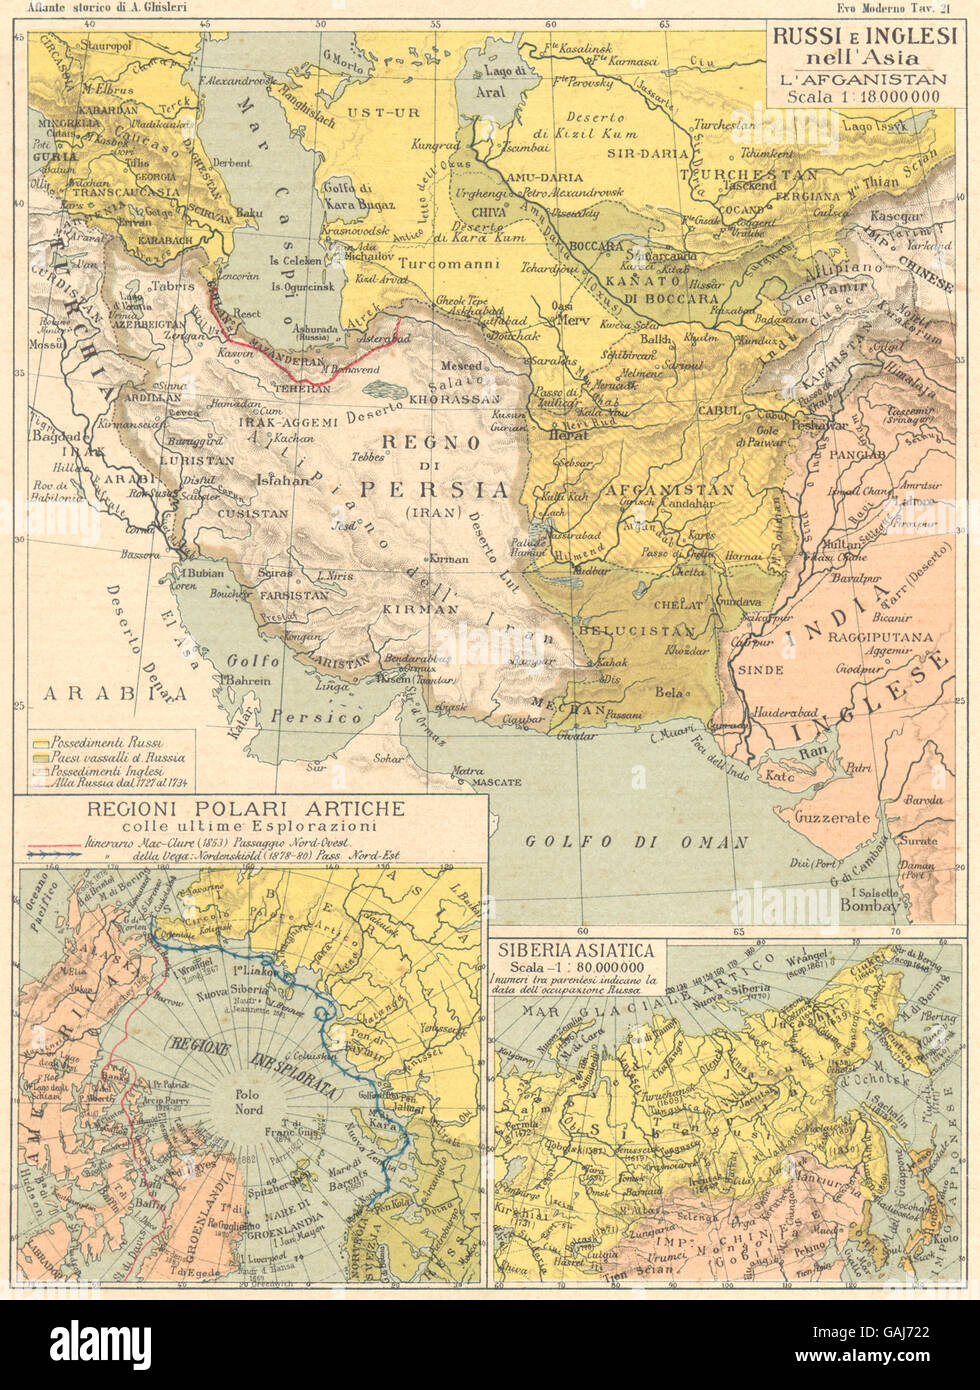 RUSSI INGLESI Asien: Iran Afghanistan Polari Artiche Esplorazion Sibirien, 1889-Karte Stockfoto